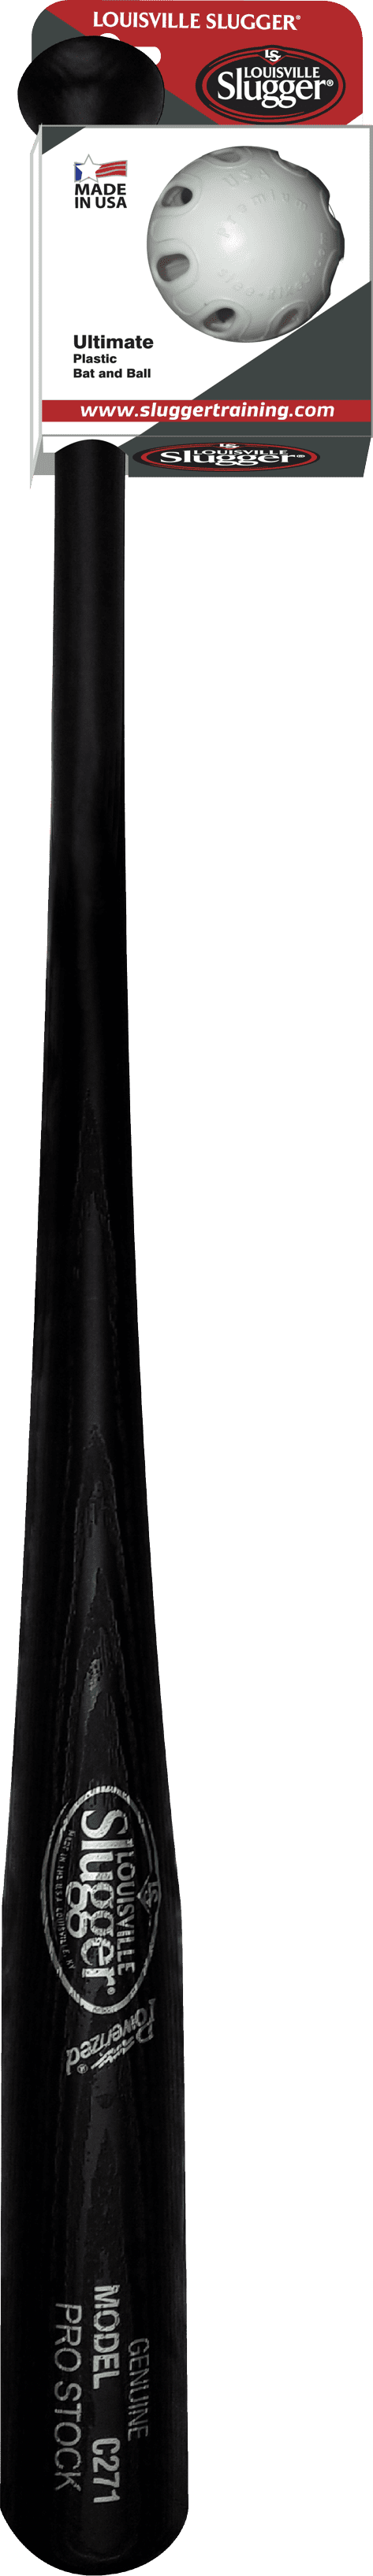 Louisville Slugger Ultimate Plastic Bat & Ball Combo